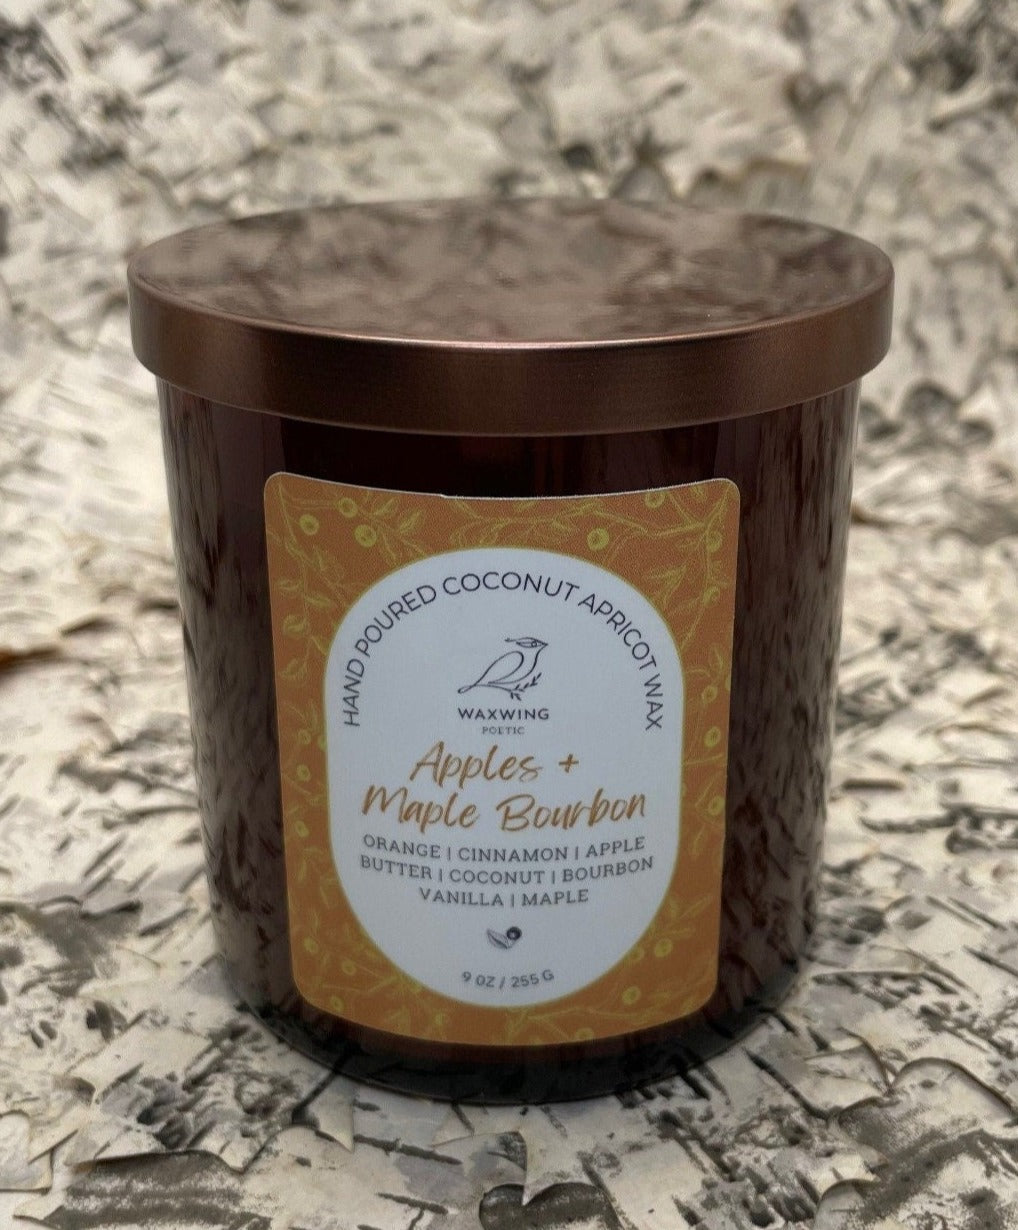 Apples + Maple Bourbon | Coconut Apricot Wax Candle